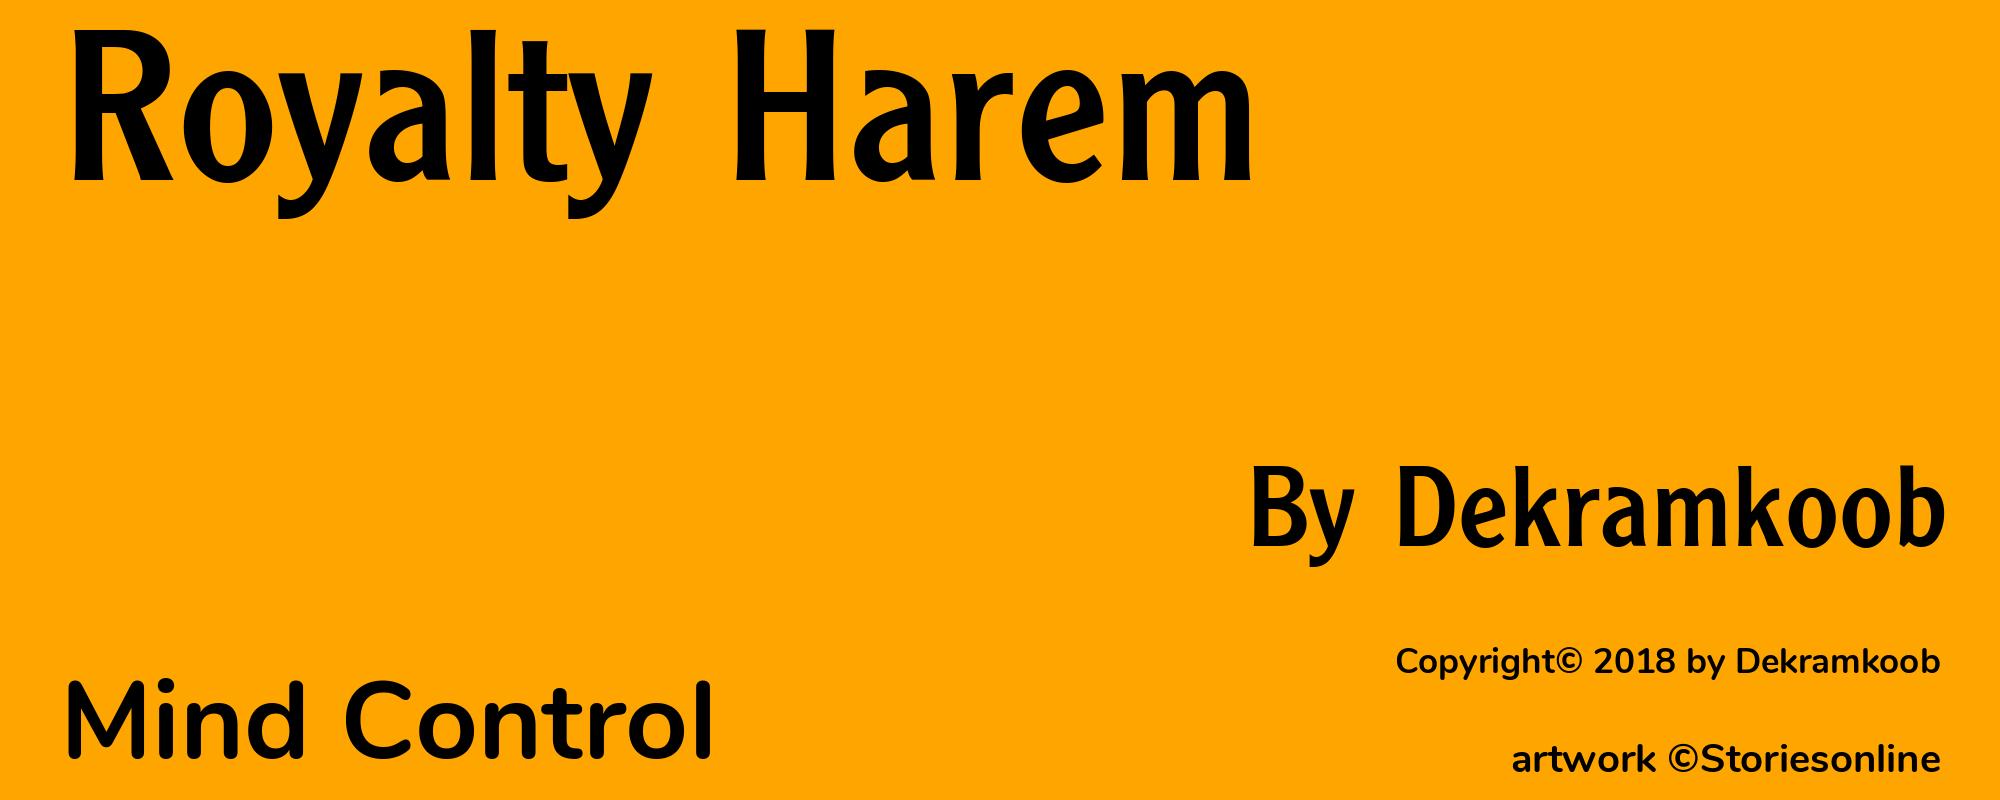 Royalty Harem - Cover